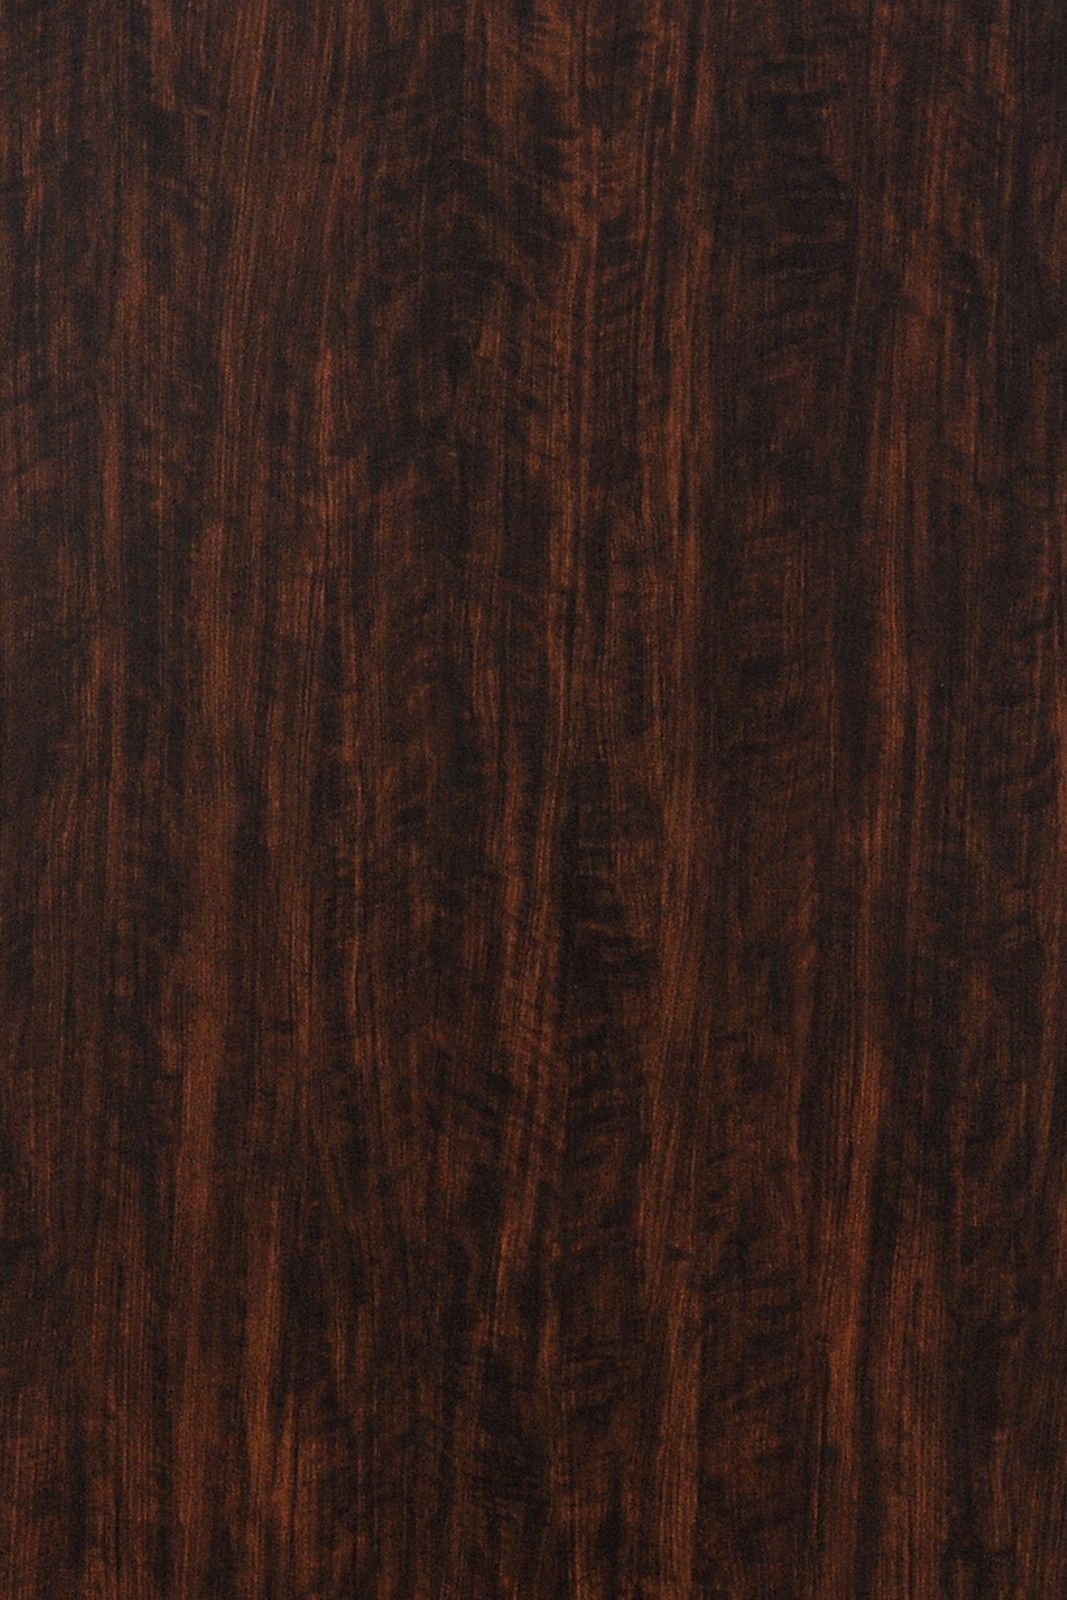 imperial walnut hardwood flooring of decorative laminates sunmica 1 0 mm aica sunmica with golden macore wp 144